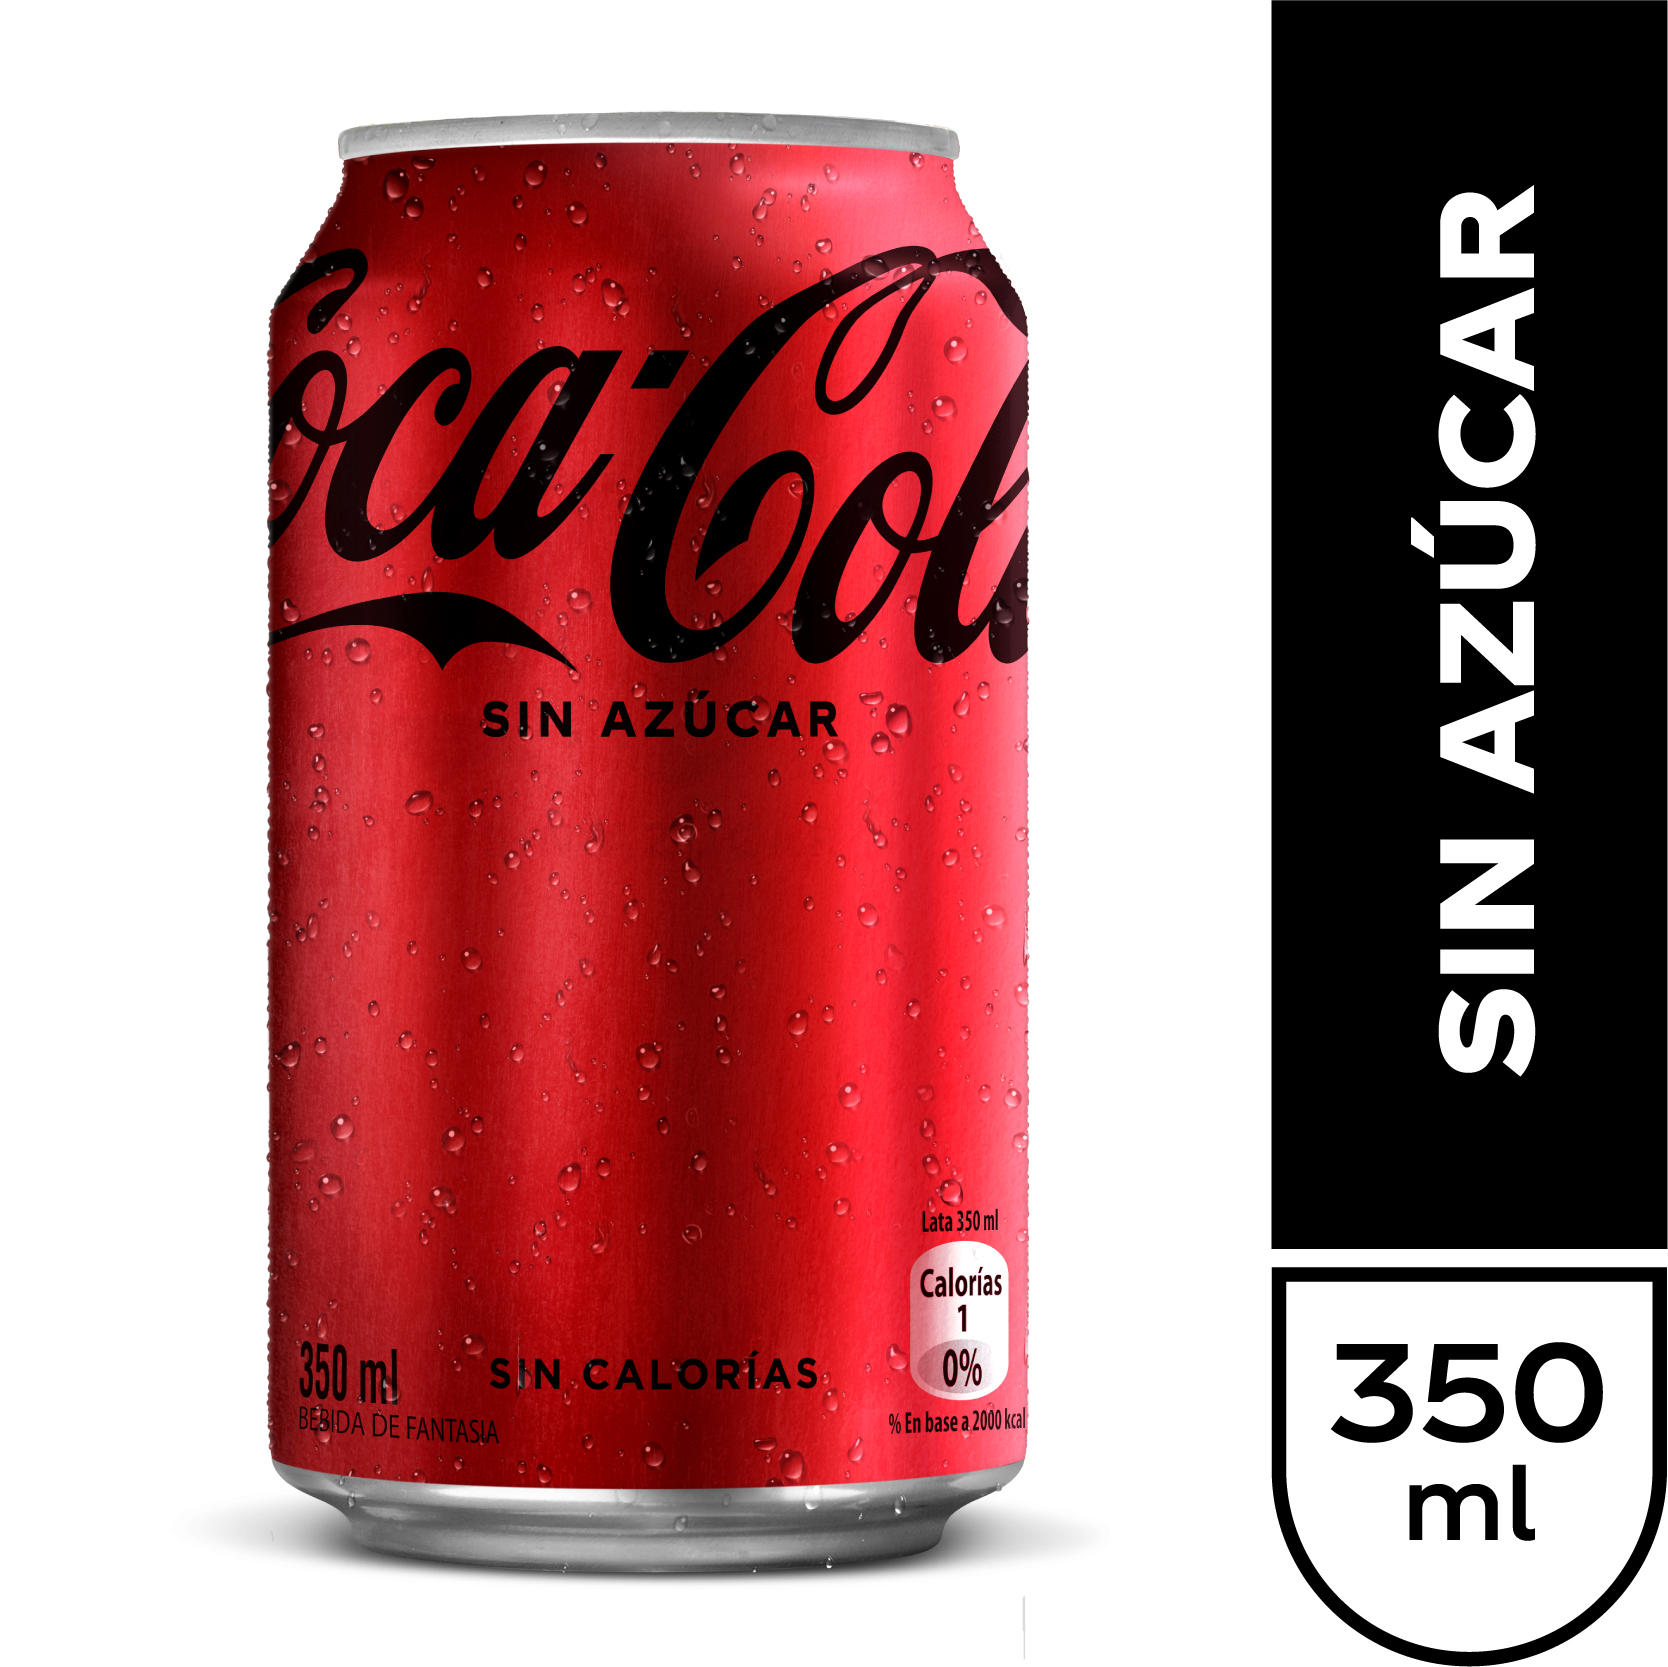 Coca-cola gaseosa sin azúcar (lata 350 ml)